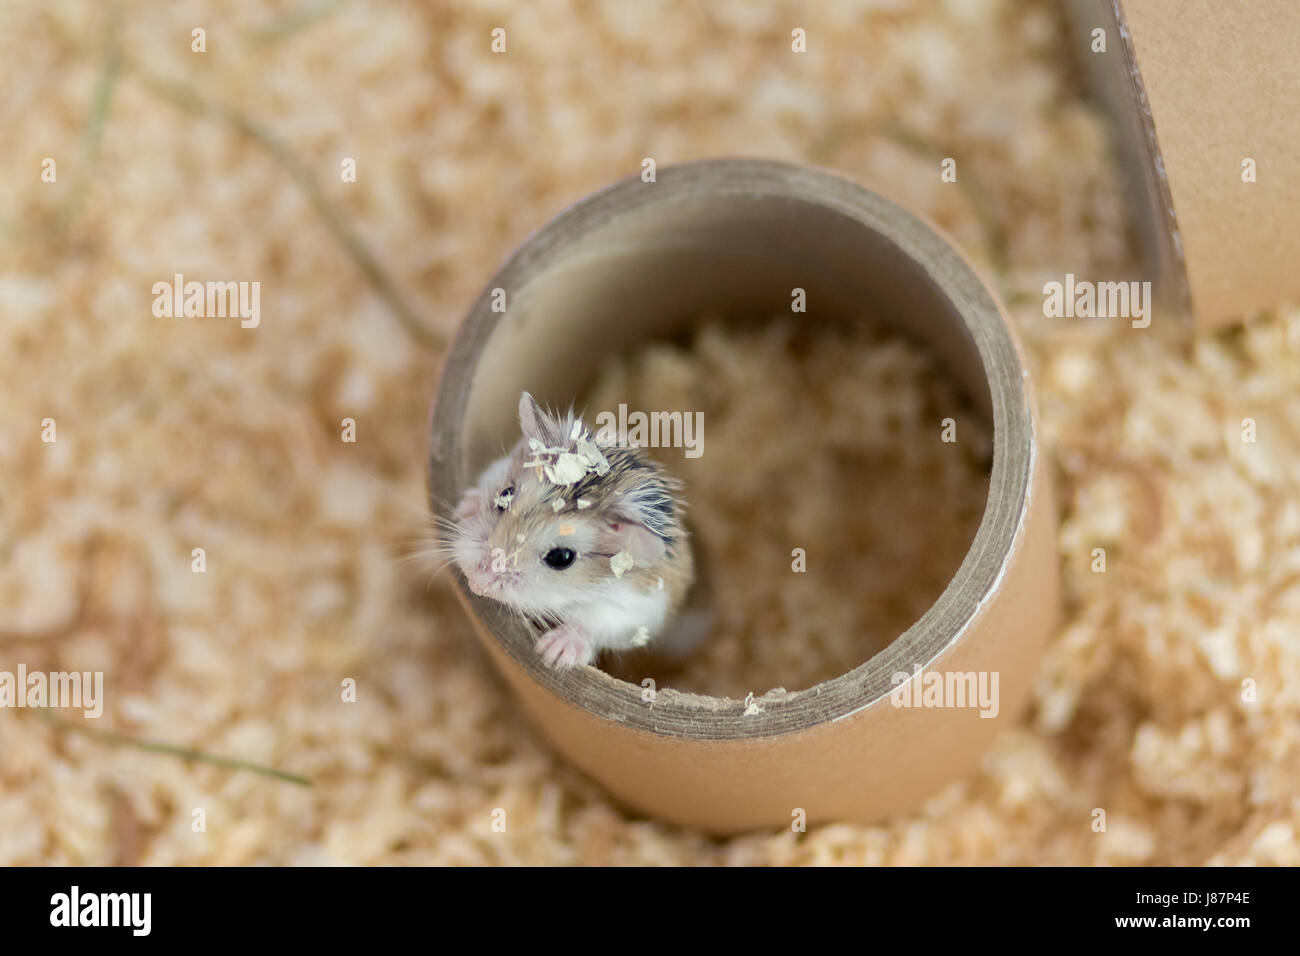 Dwarf Roborovski hamster climbing on paper cylinder Stock Photo